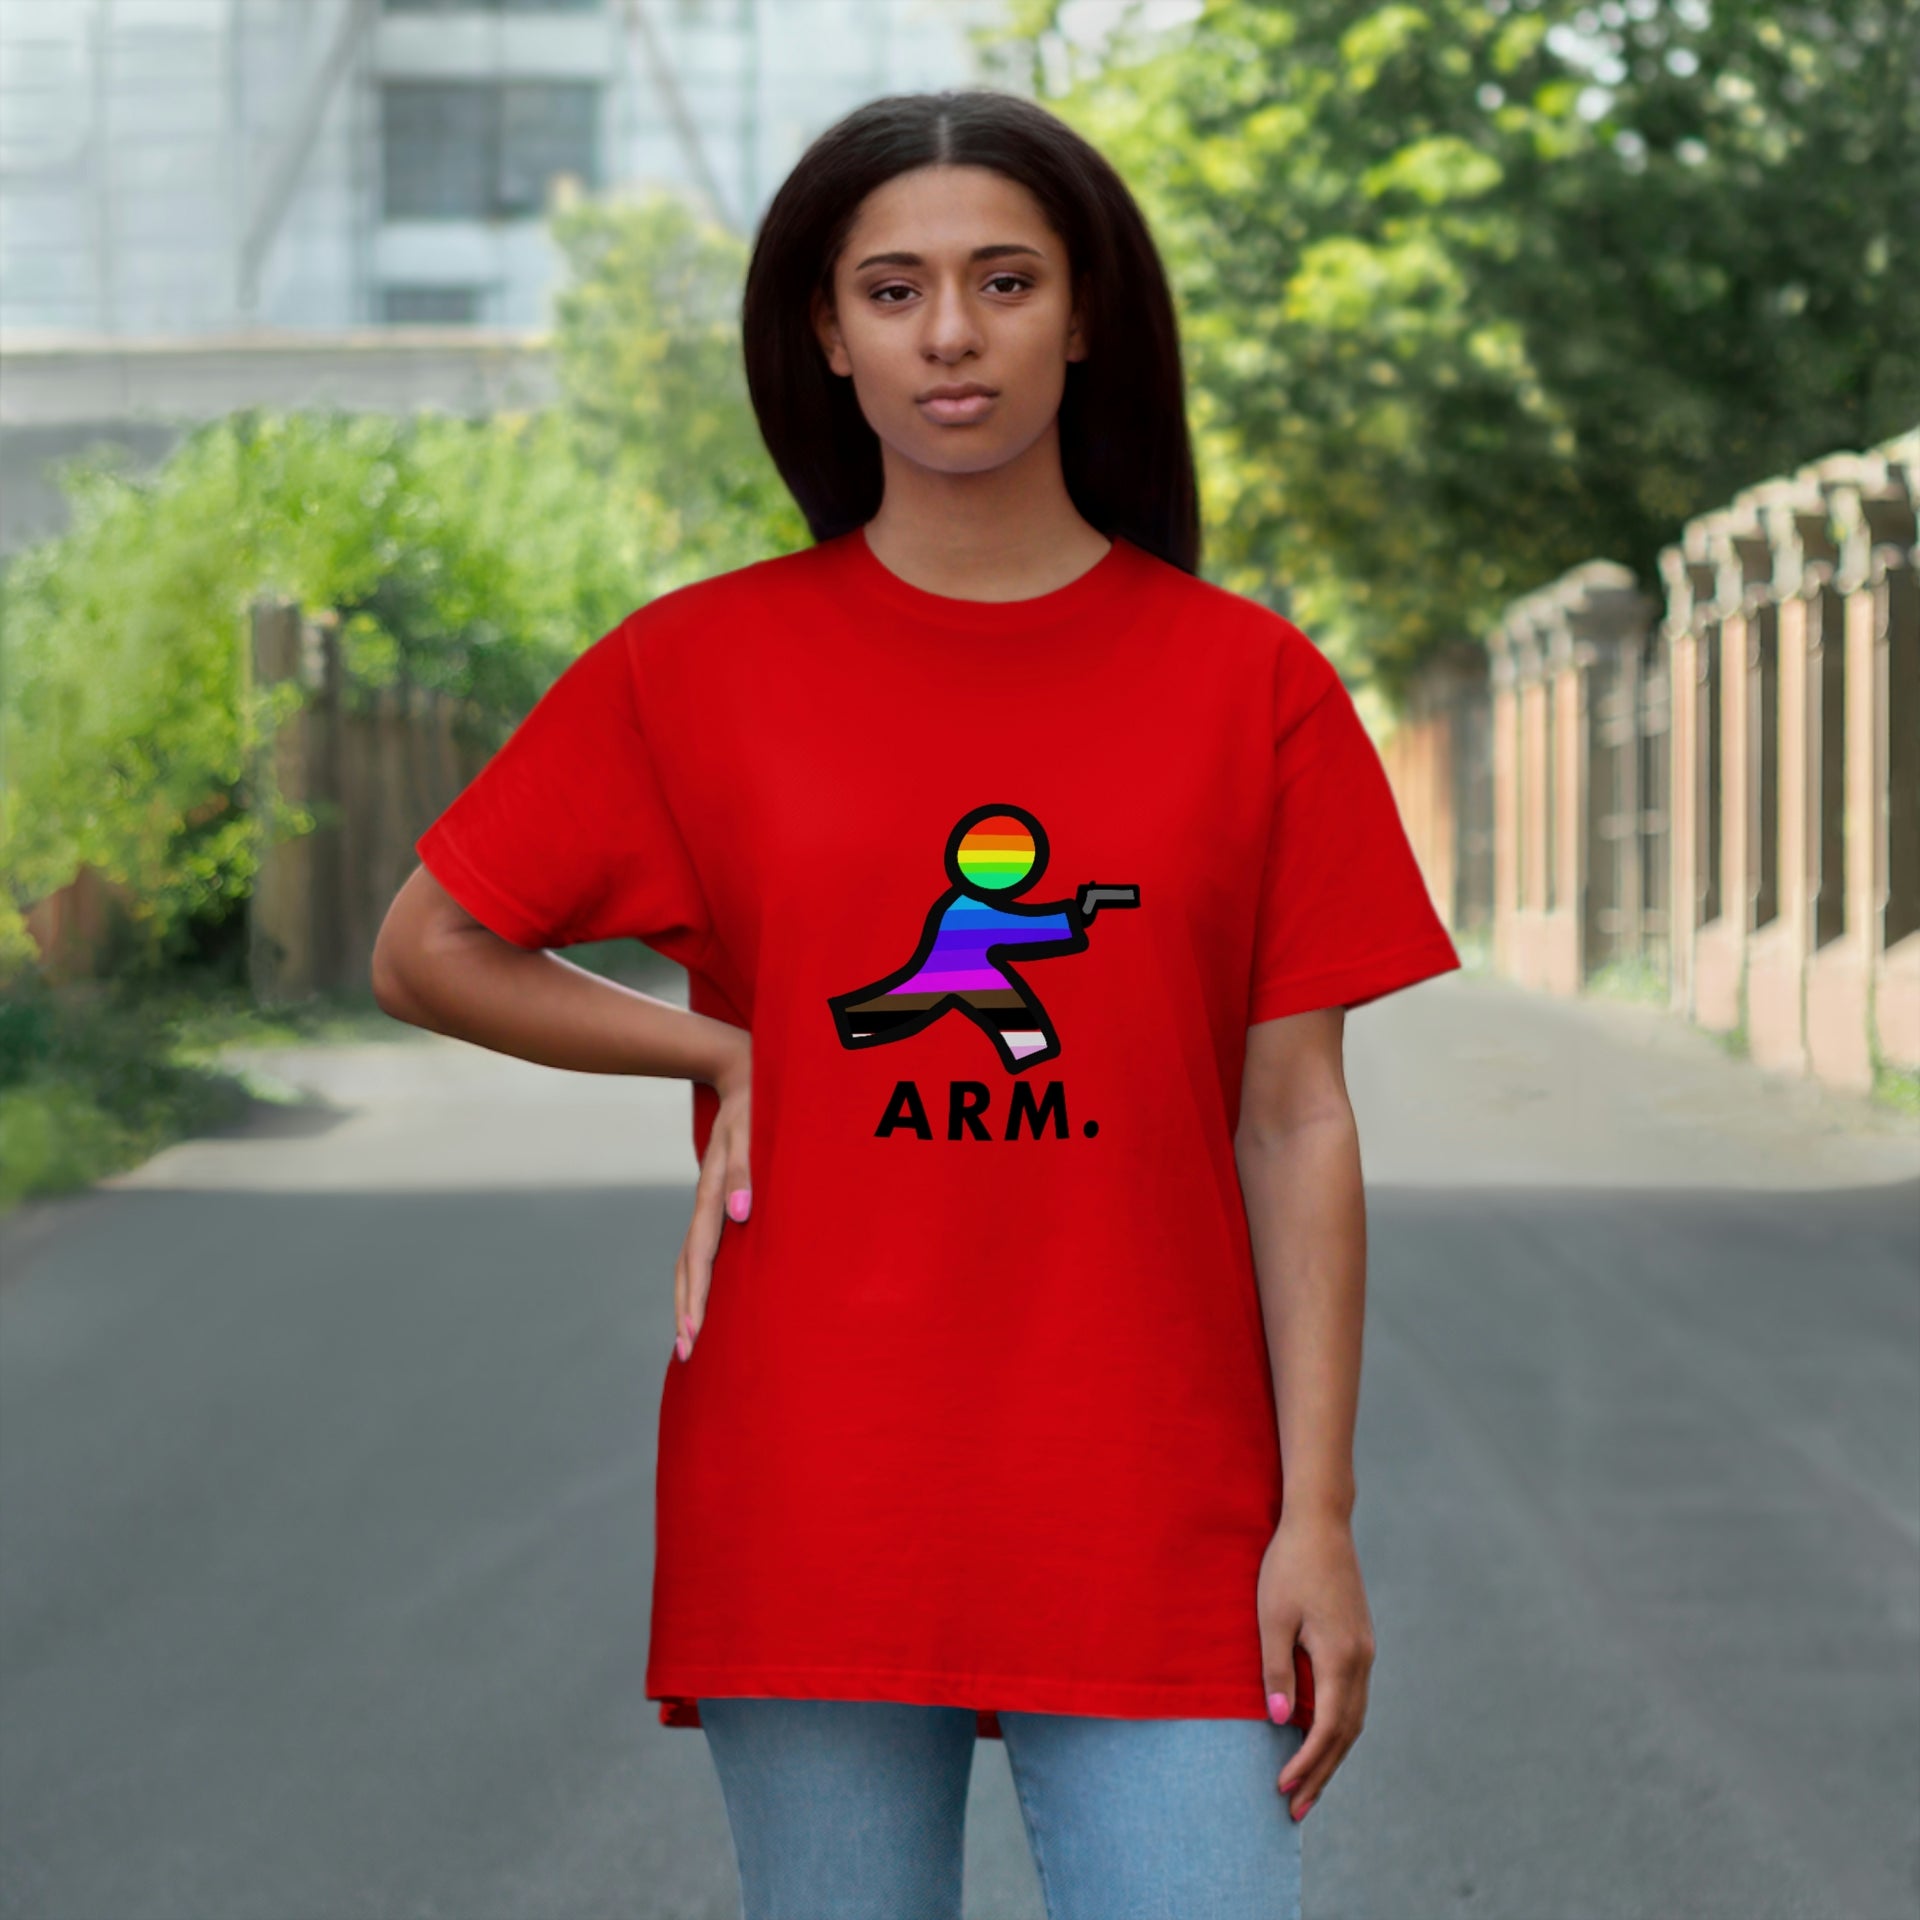 Arm them Single Jersey T-shirt